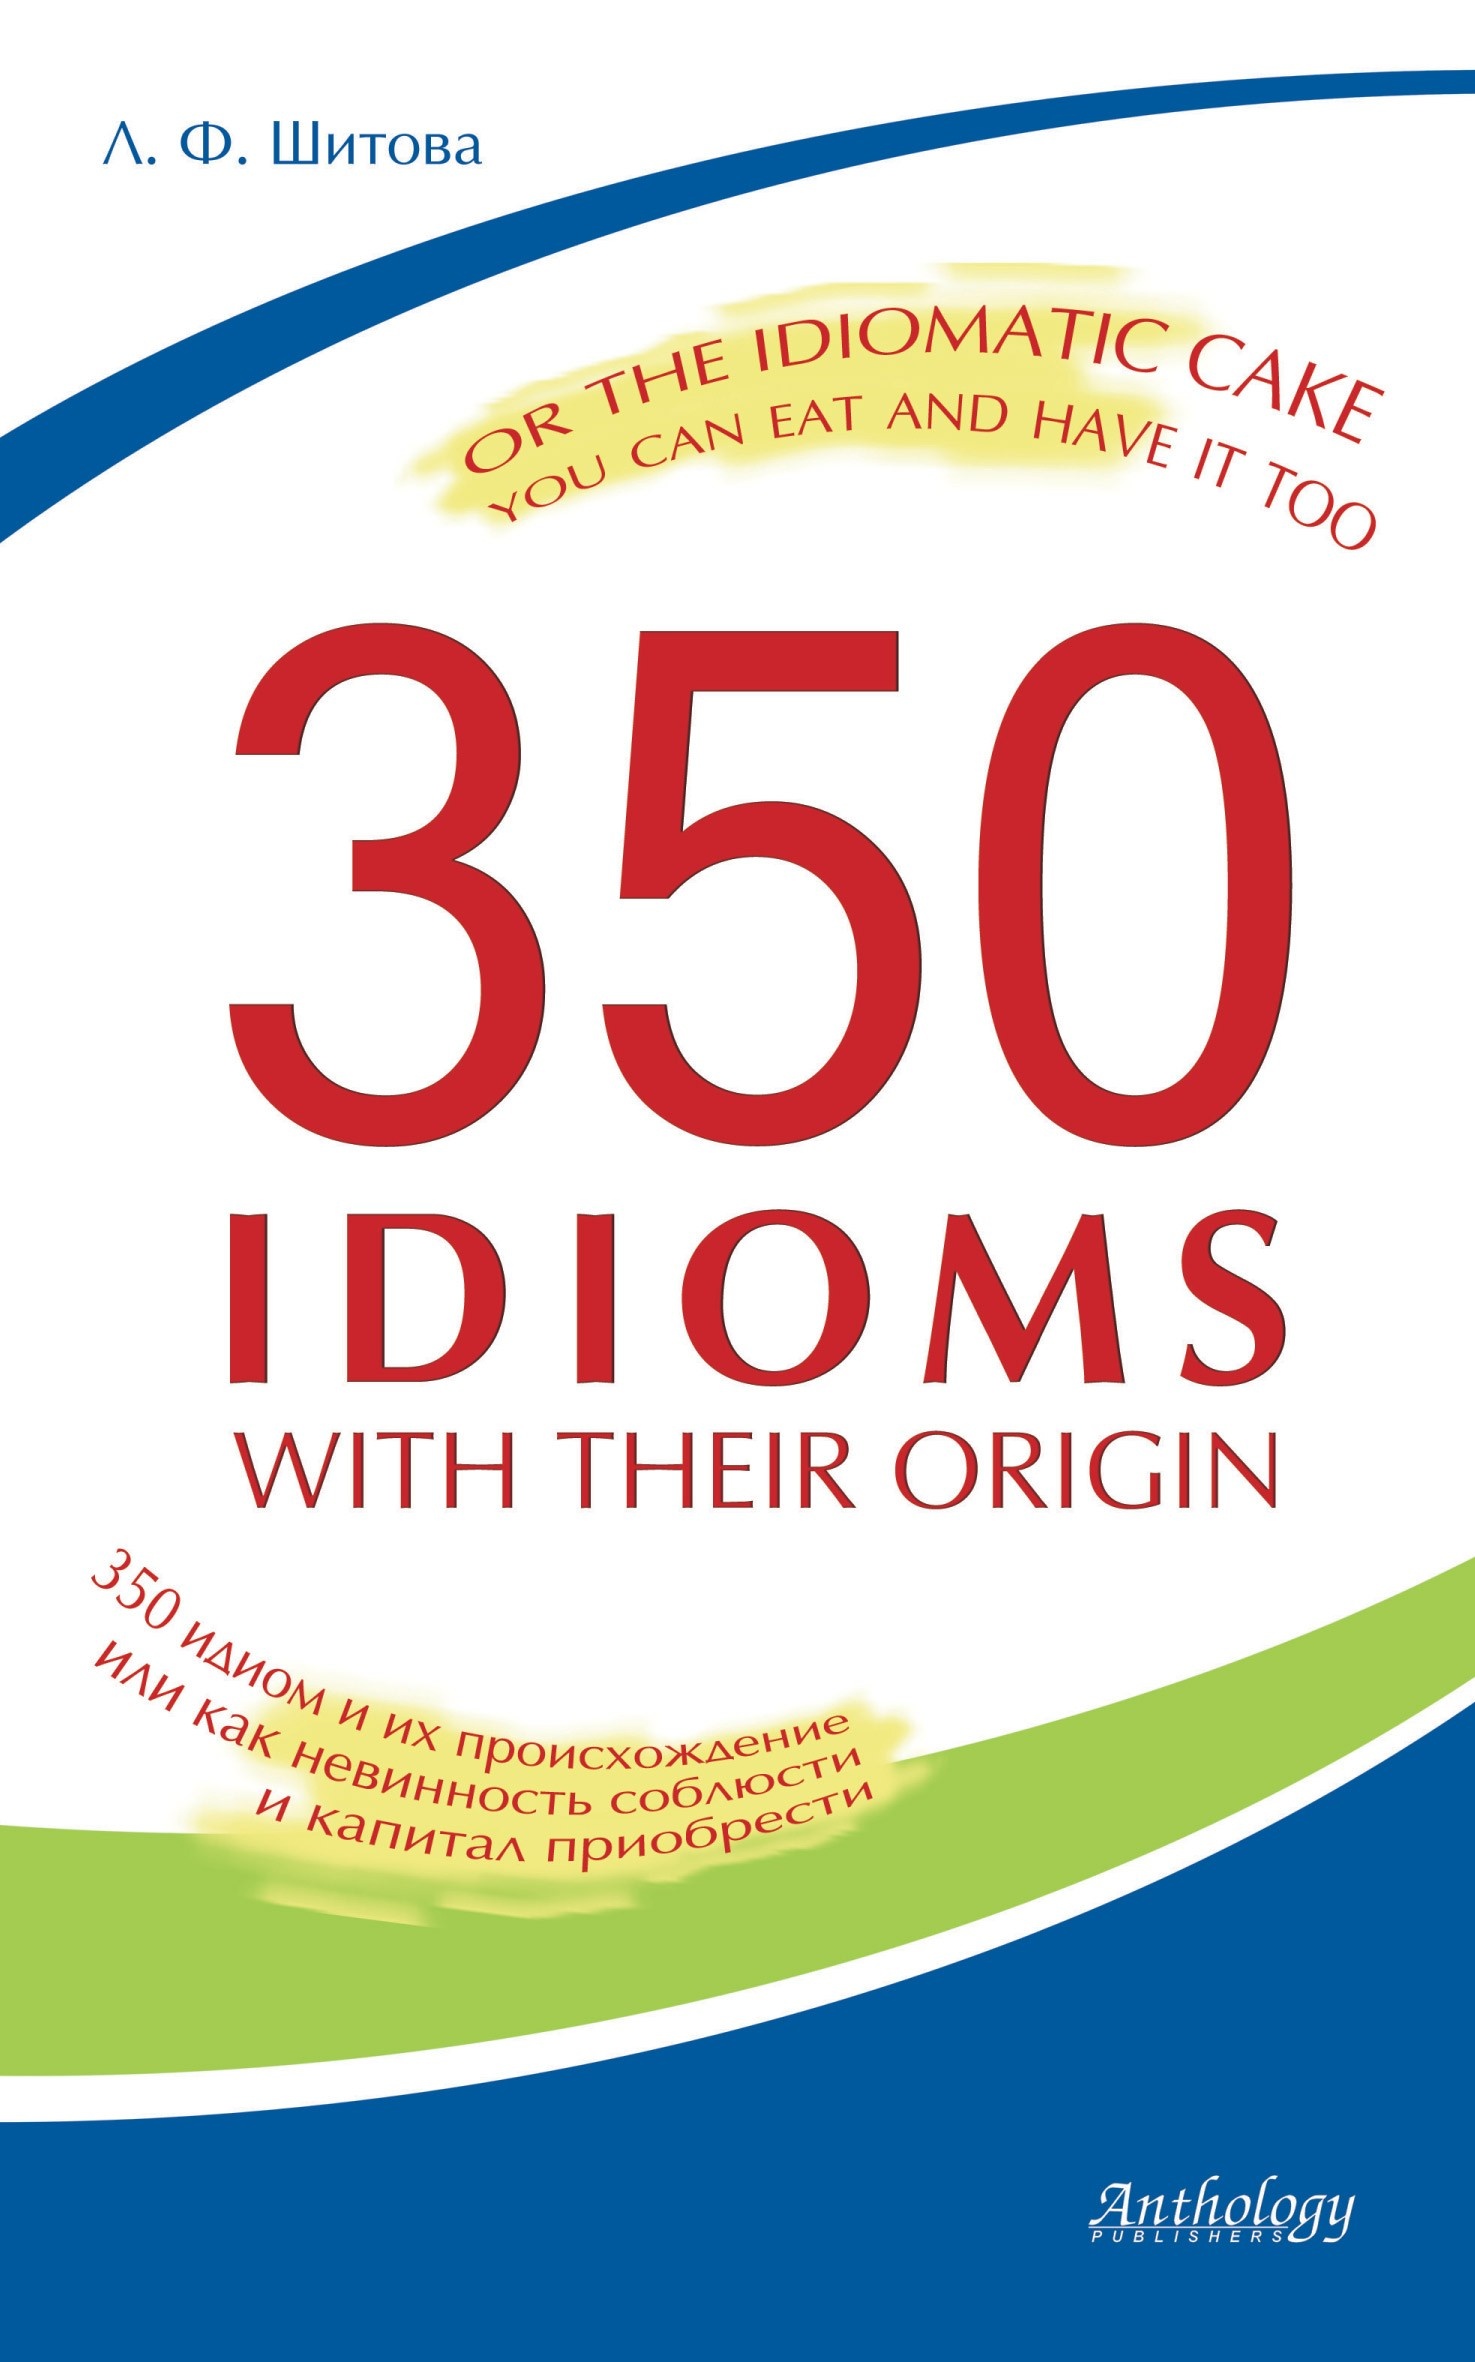 350 Idioms with Their Origin, or The Idiomatic Cake You Can Eat and Have It Too = 350 идиом и их происхождение, или как невинность соблюсти и капитал приобрести